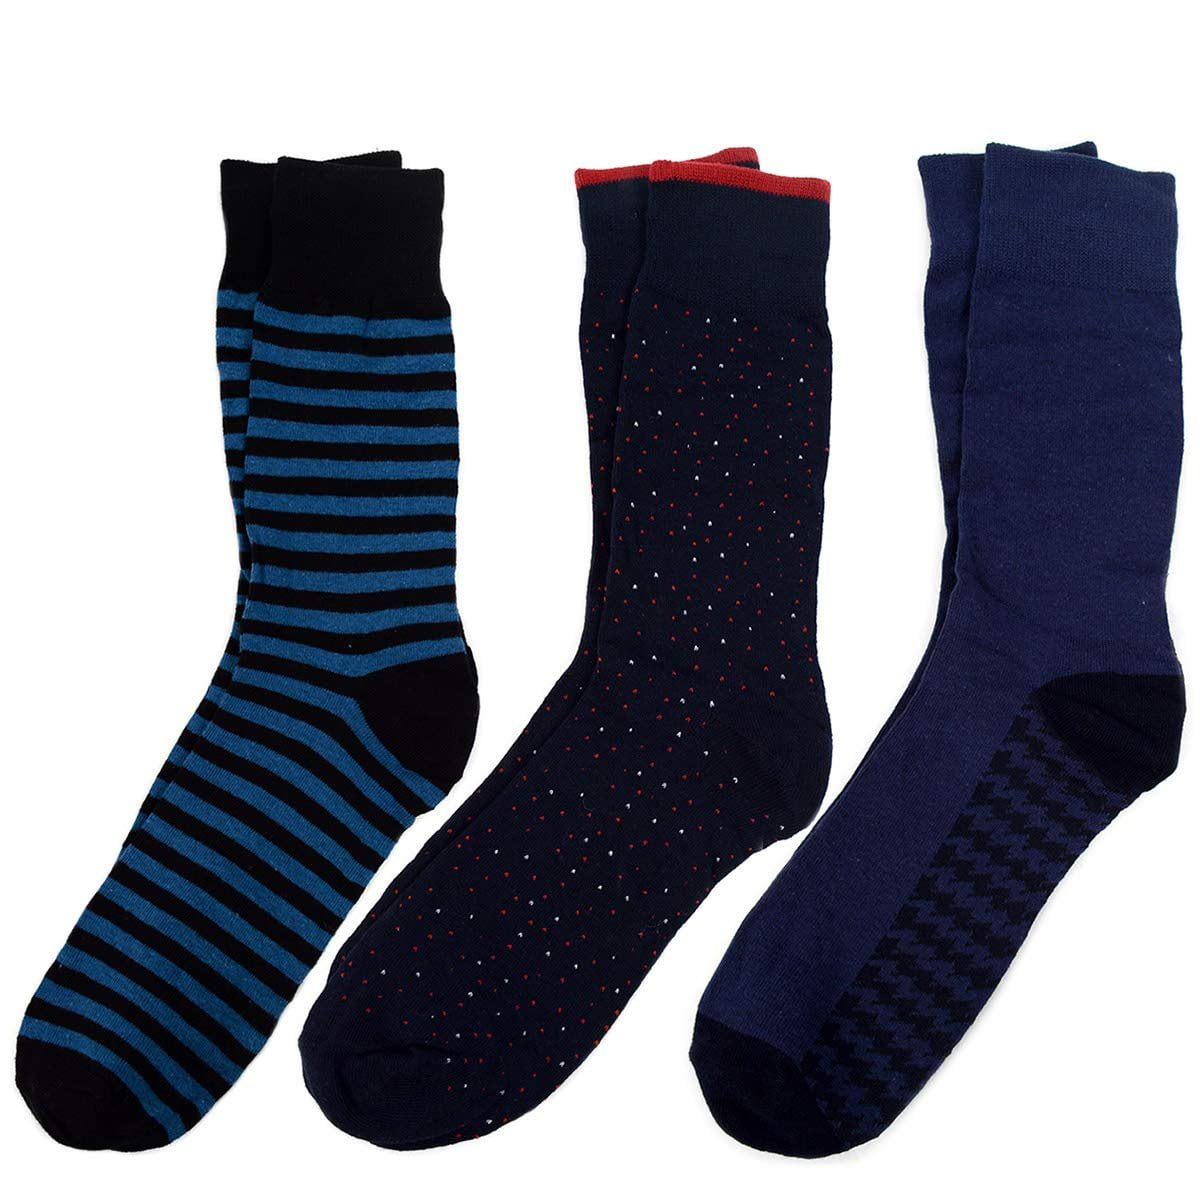 BG Premium Men's Dress Socks 3 Pairs Gift Set - Fits 10-13 - Solid ...